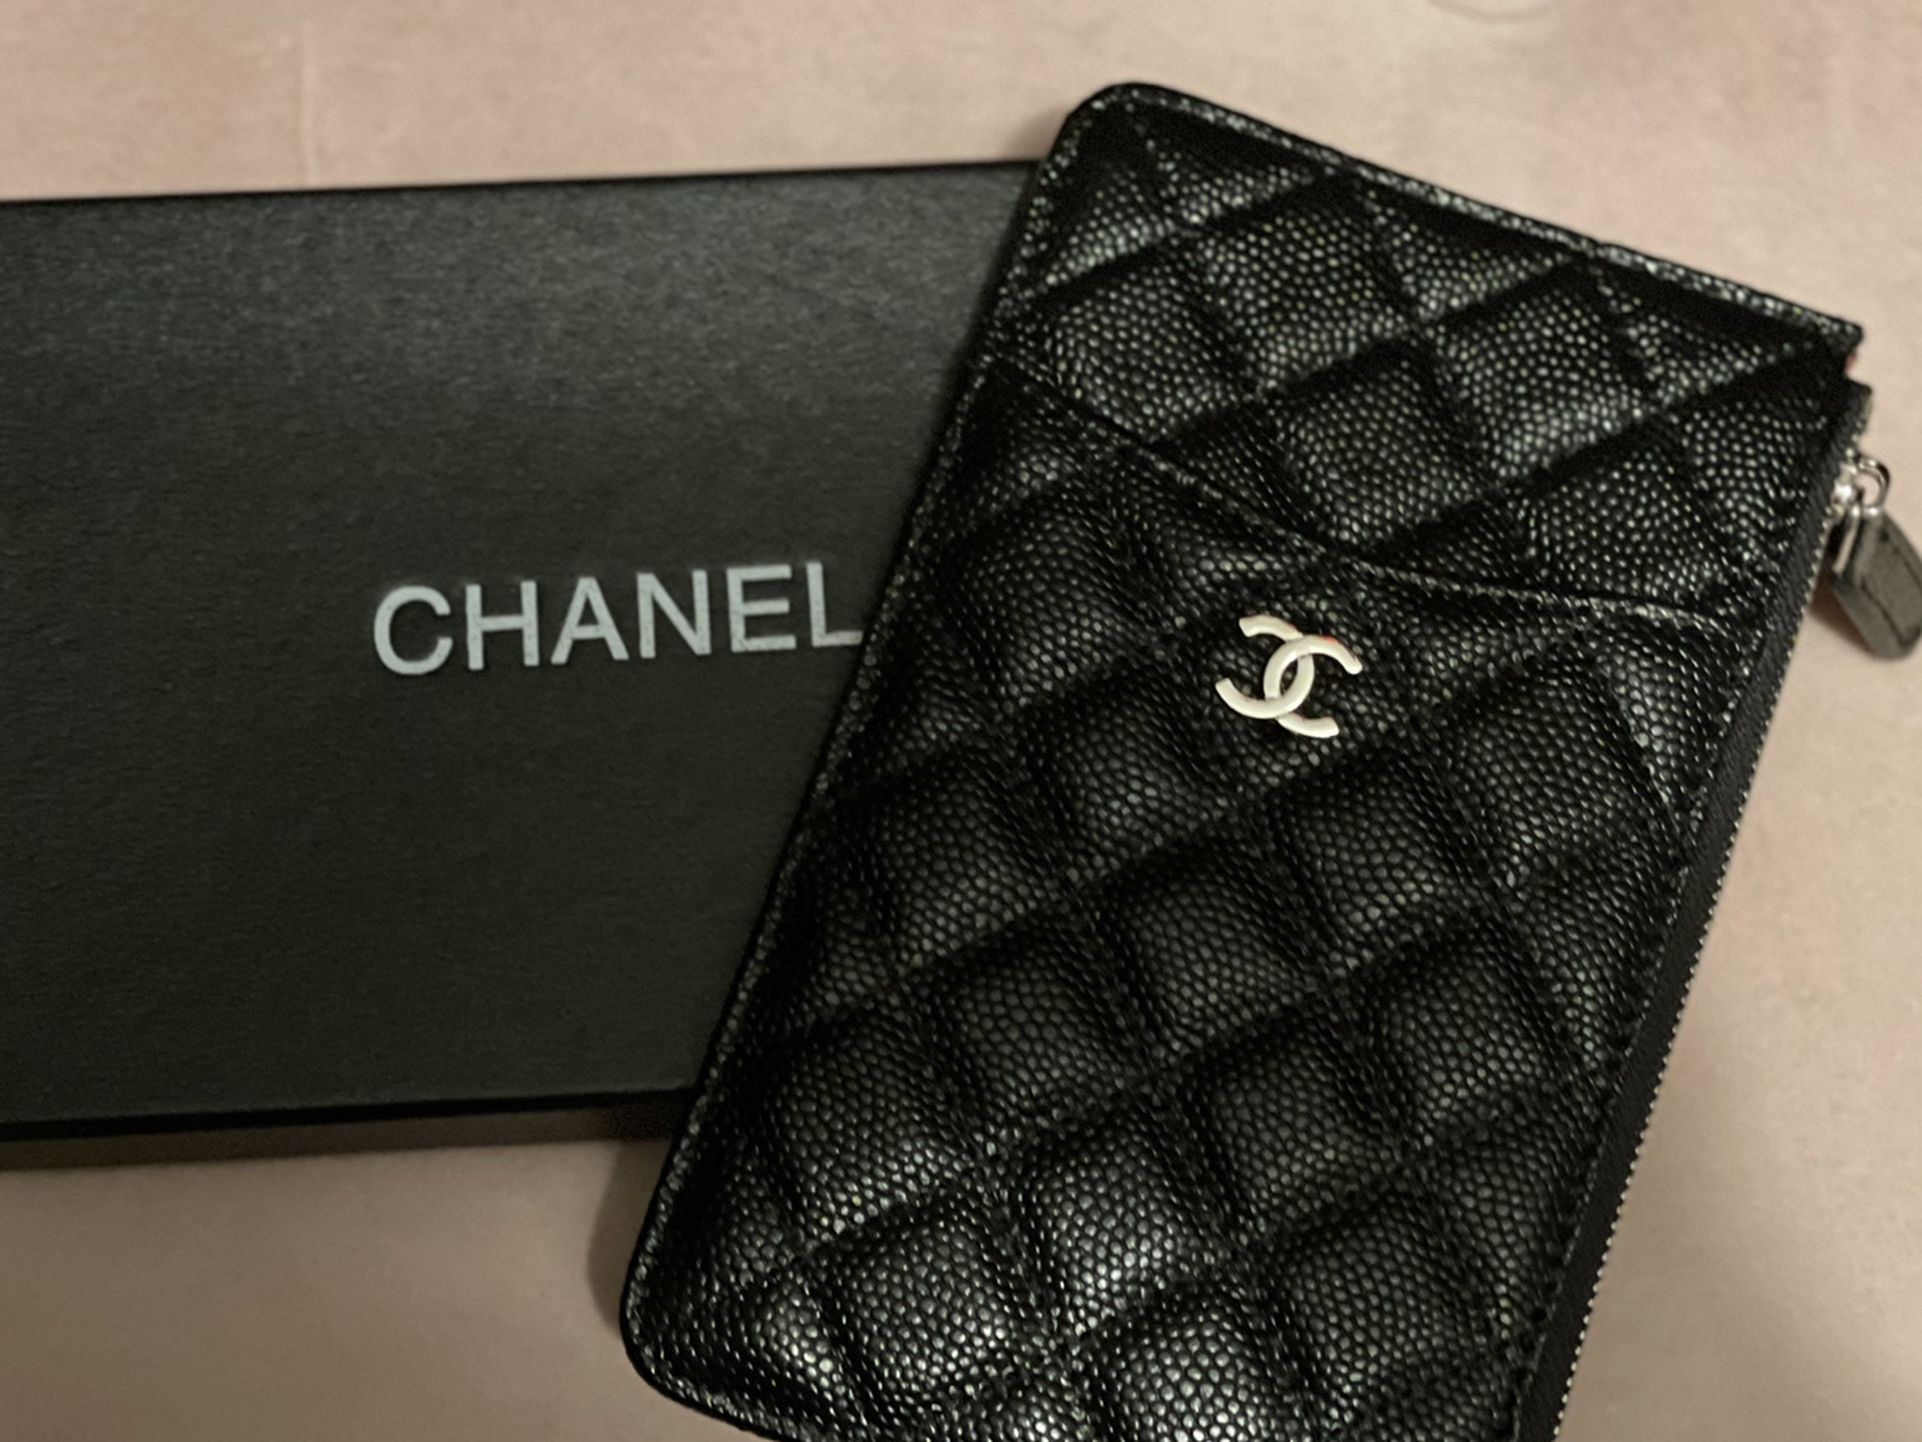 Chanel Phone/Wallet Holder